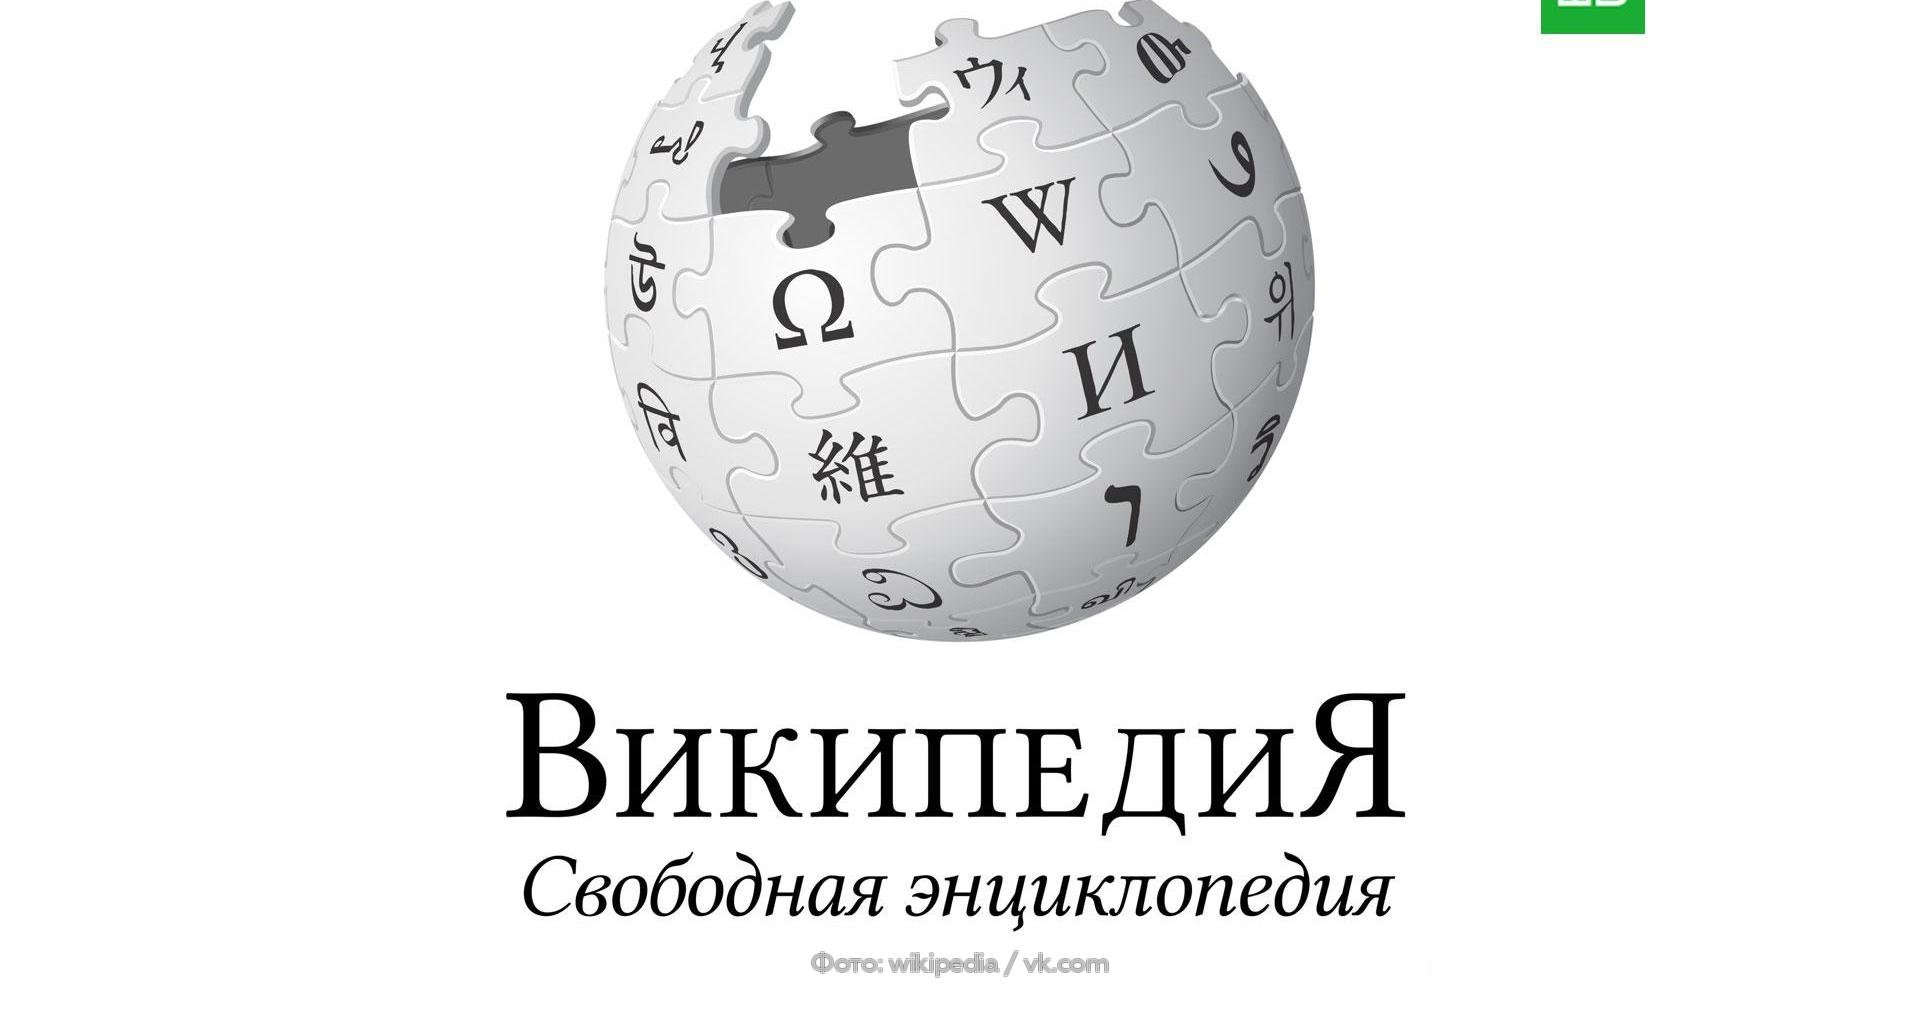 Википедия лого. Wikipedia фото. Википедия логотип картинка. Википедия картинки. Https ru wikipedia org wiki википедия